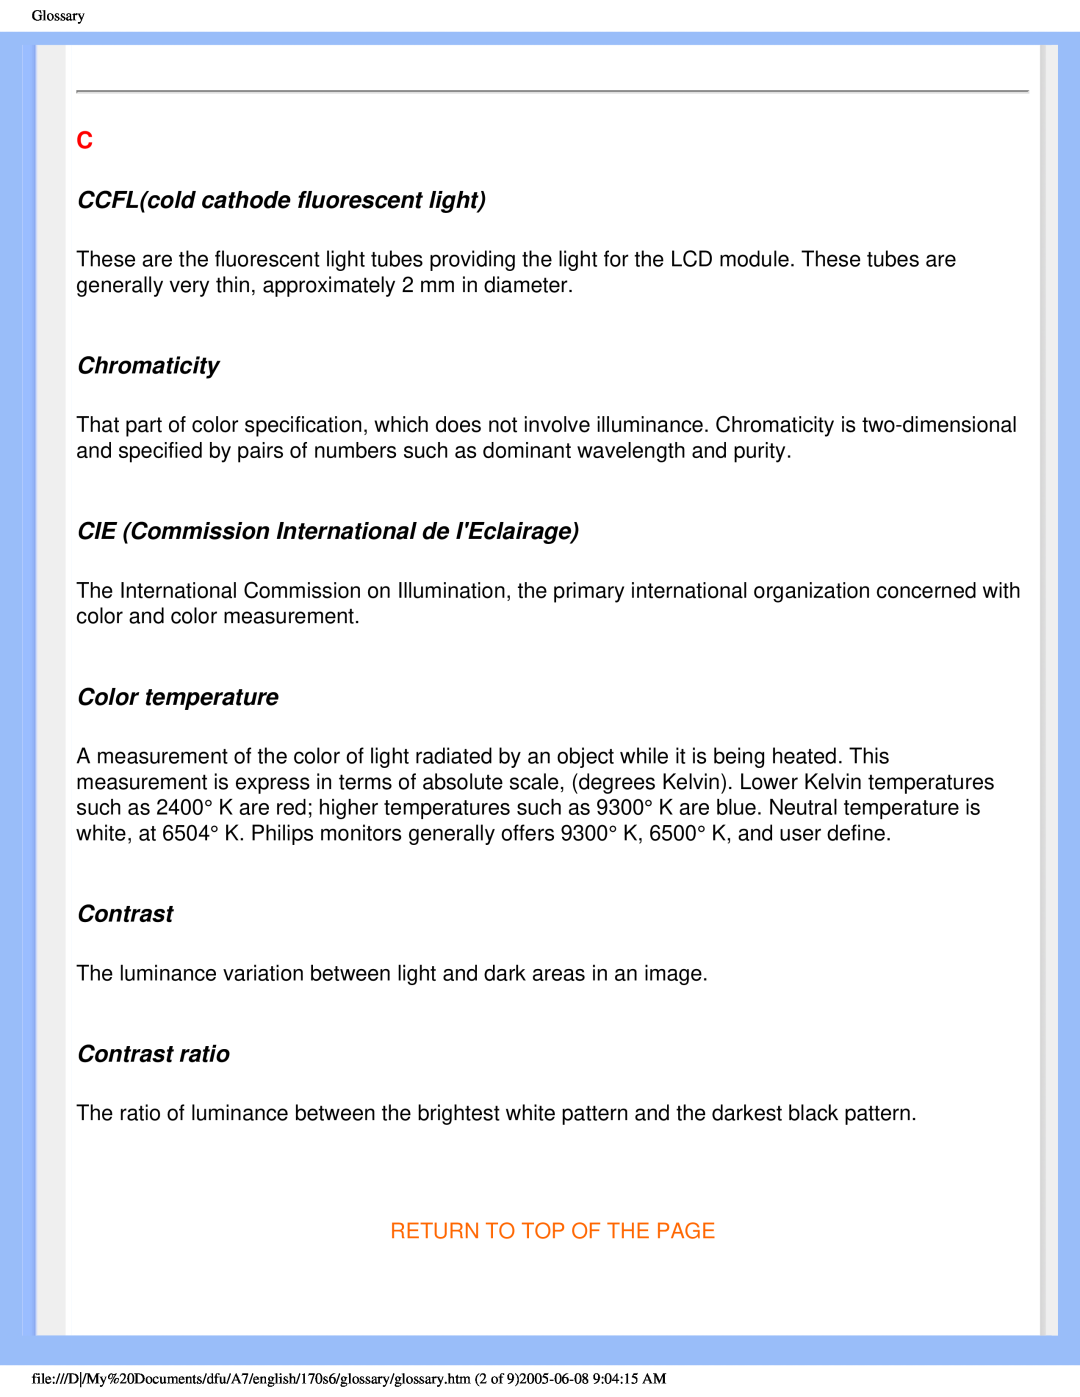 Philips 170s6 CCFLcold cathode fluorescent light, Chromaticity, CIE Commission International de IEclairage, Contrast 